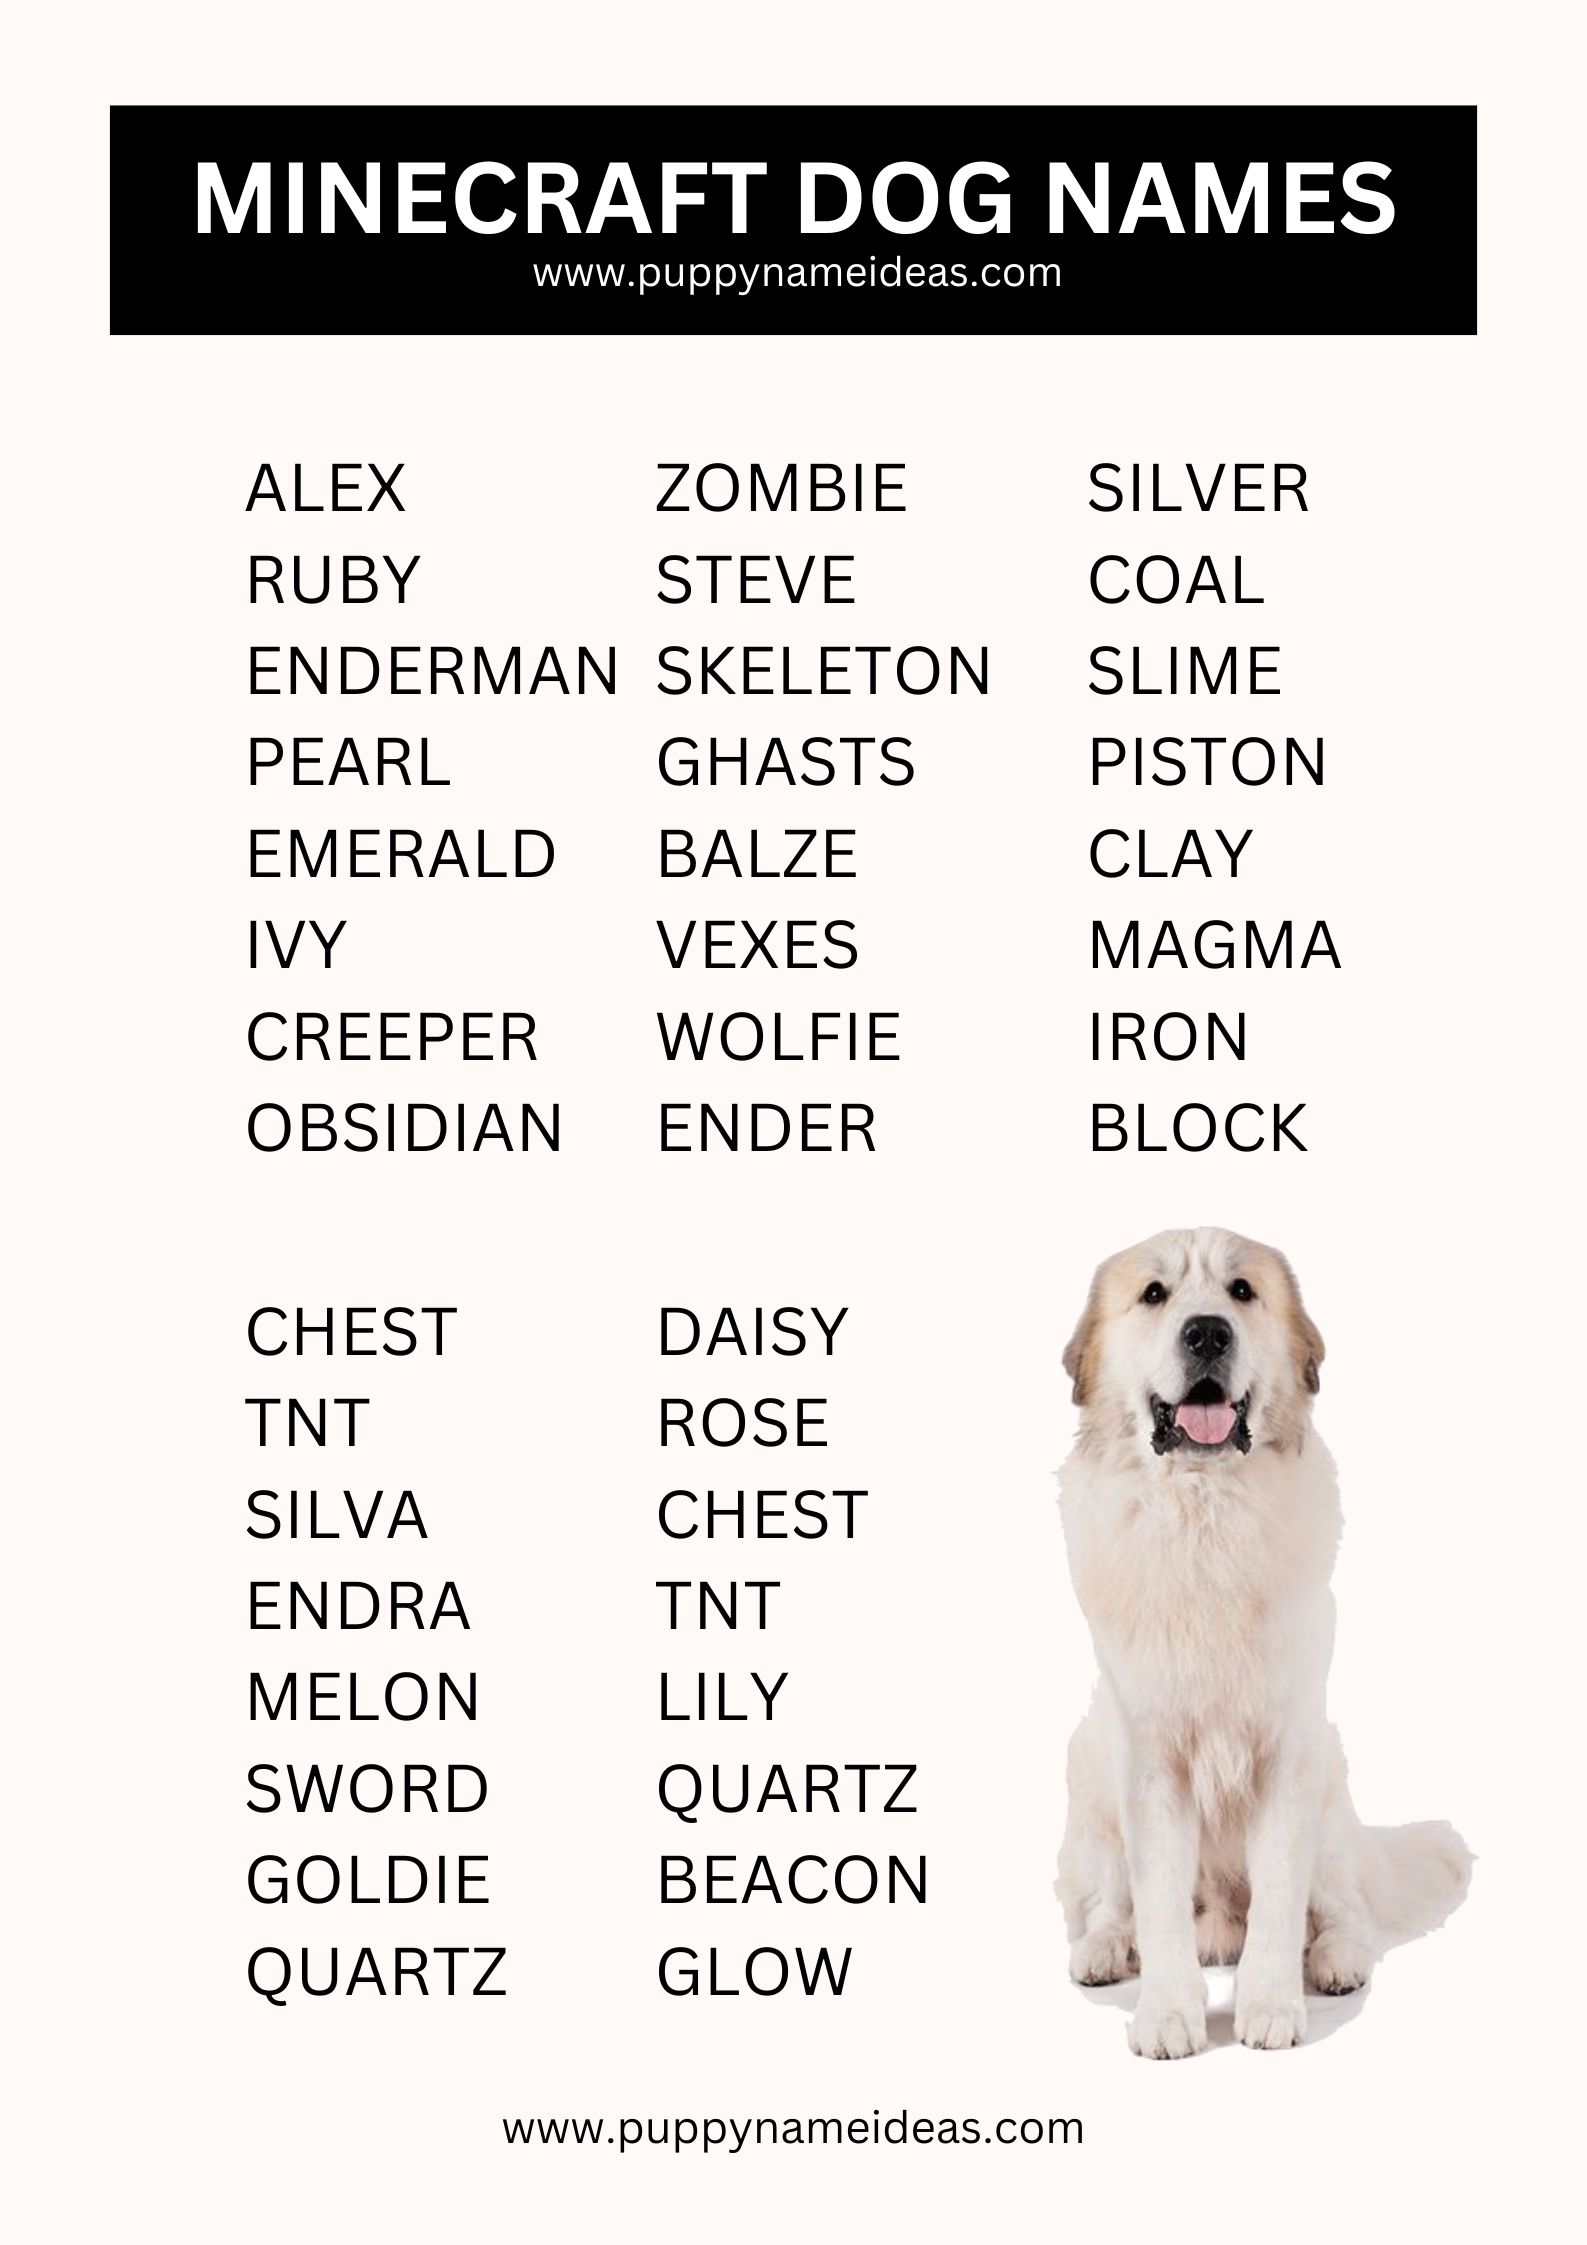 List Of Minecraft Dog Names